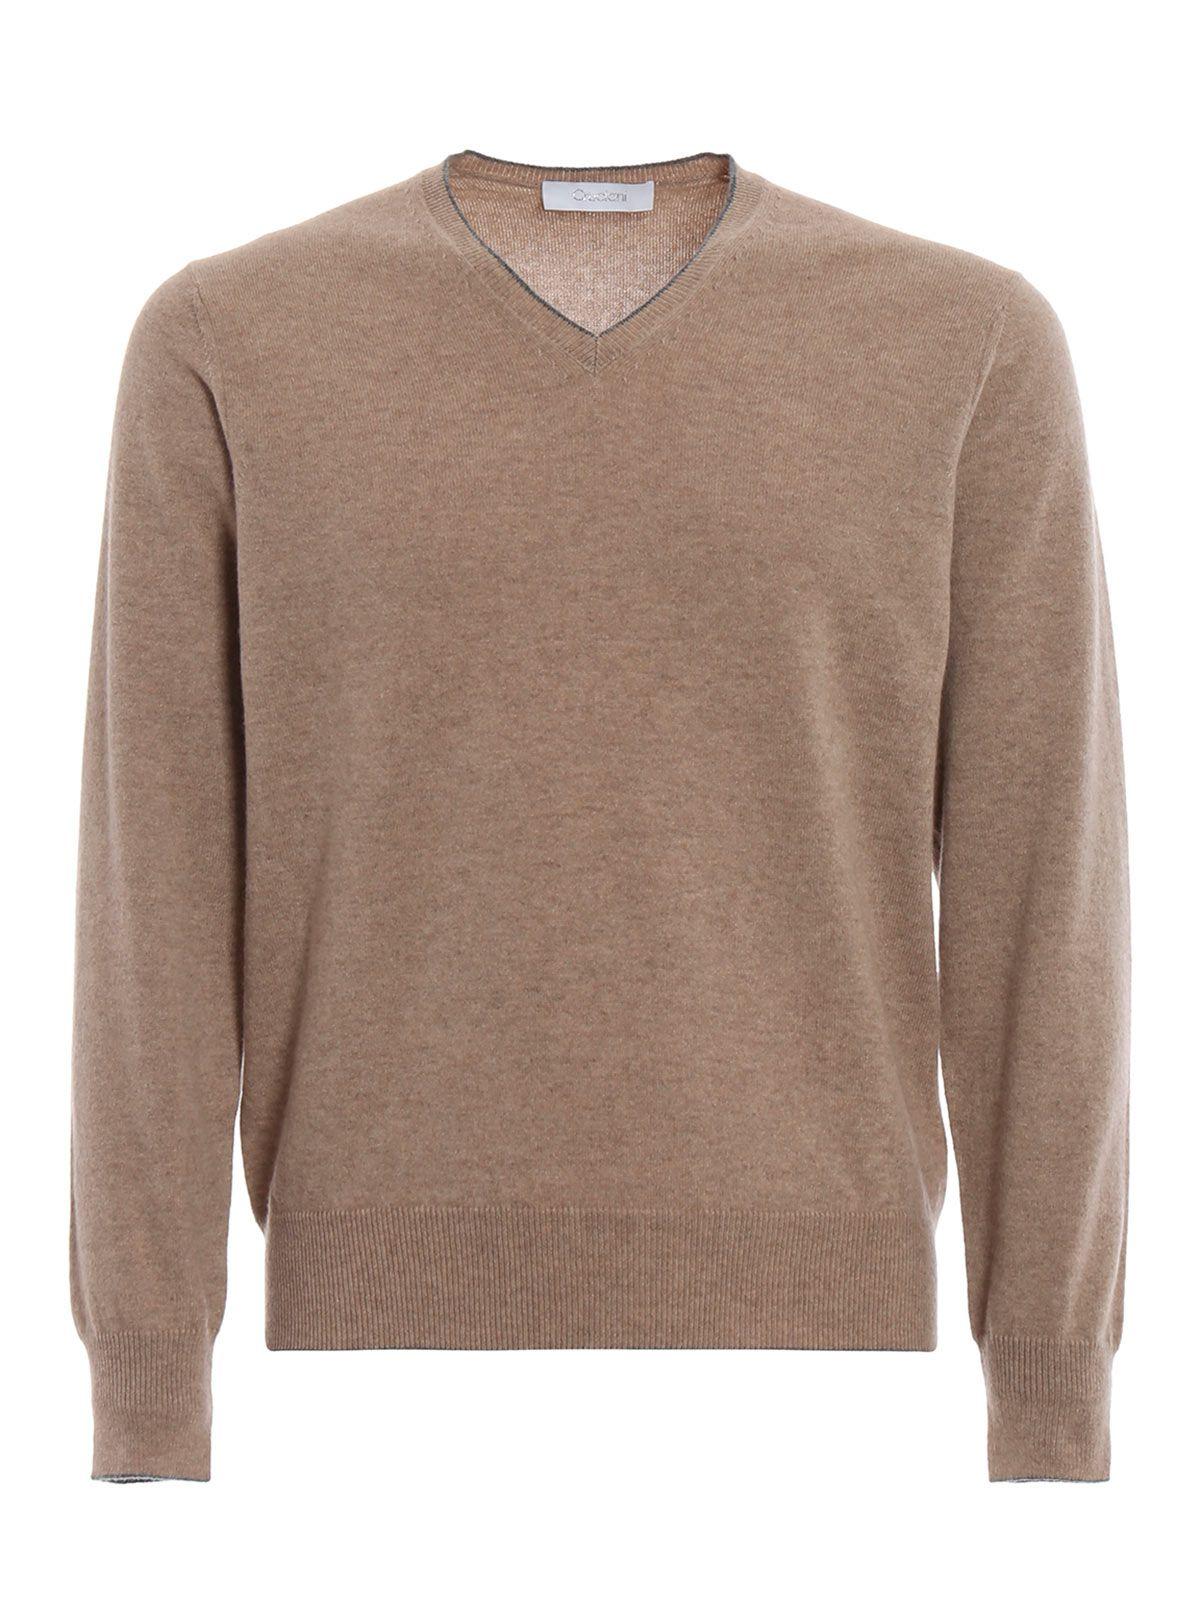 Cruciani Beige Cashmere Sweater in Natural for Men - Lyst